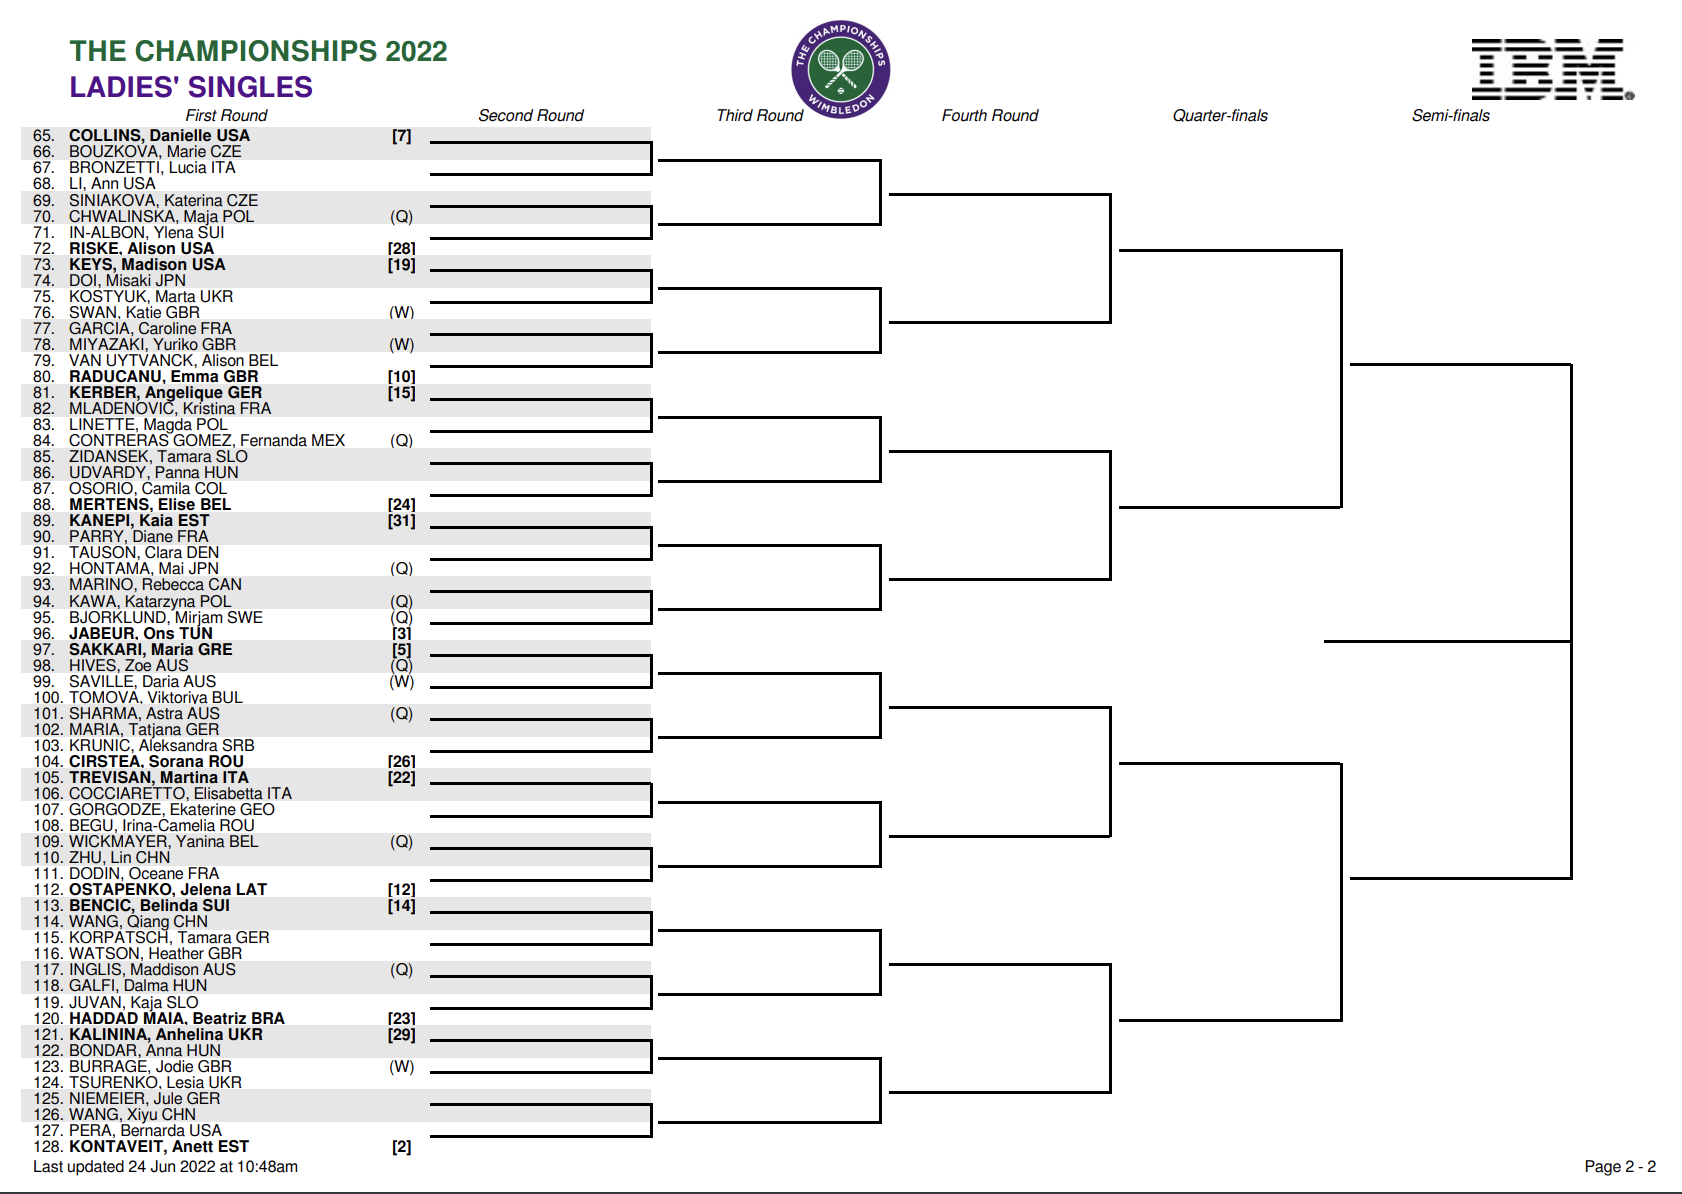 2023 Wimbledon how to watch, schedule, draw – NBC 7 San Diego